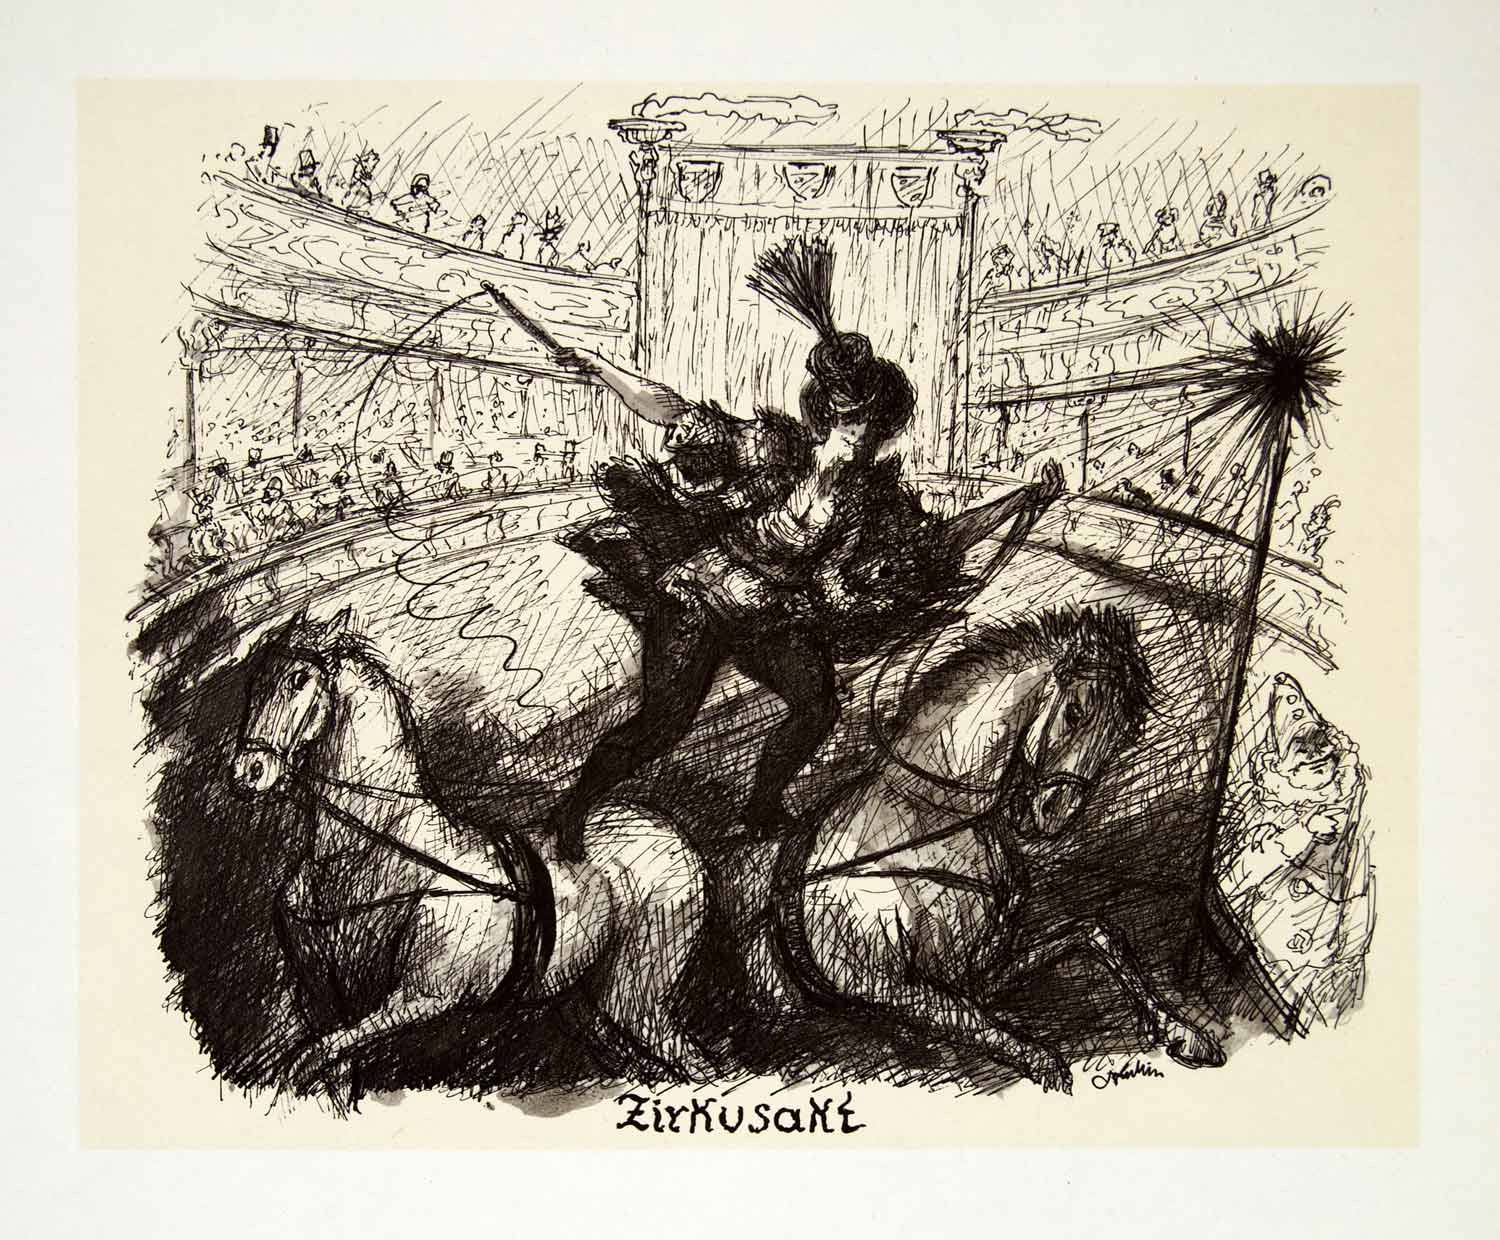 1969 Aquatone Print Alfred Kubin Art Circus Horse Acrobatics Live XDG2